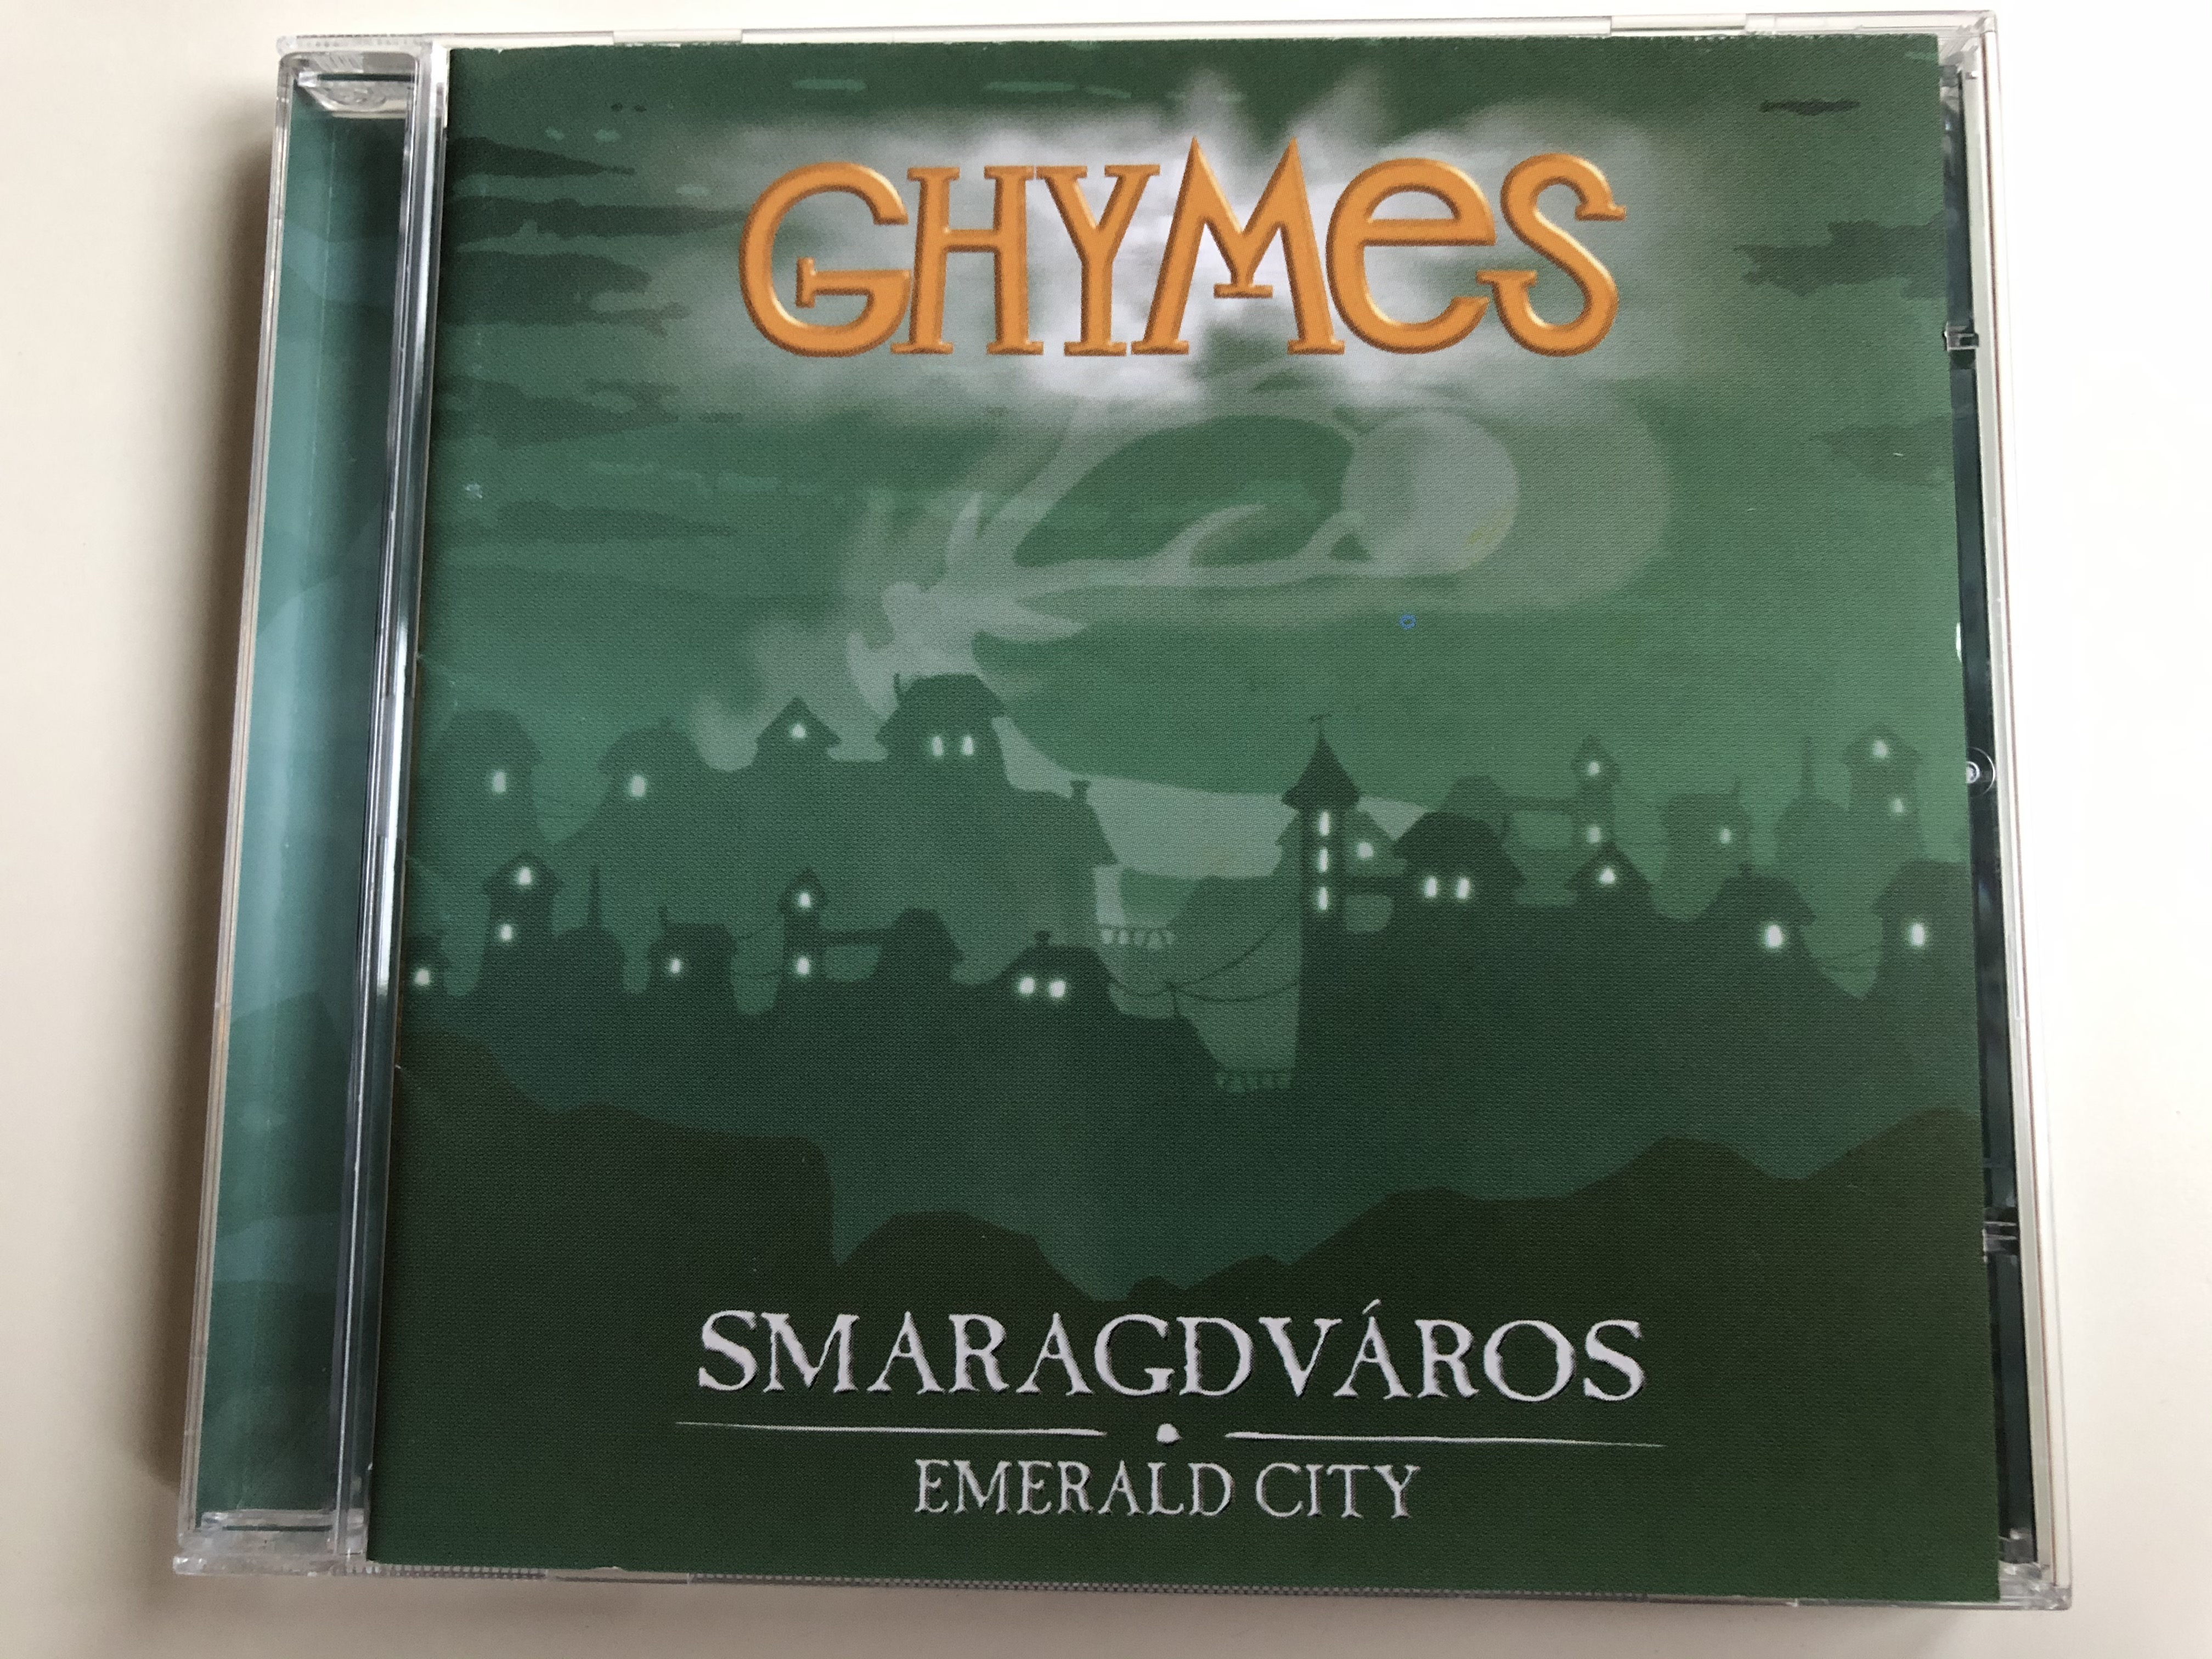 ghymes-smaragdv-ros-emerald-city-emi-audio-cd-2000-5306722-1-.jpg